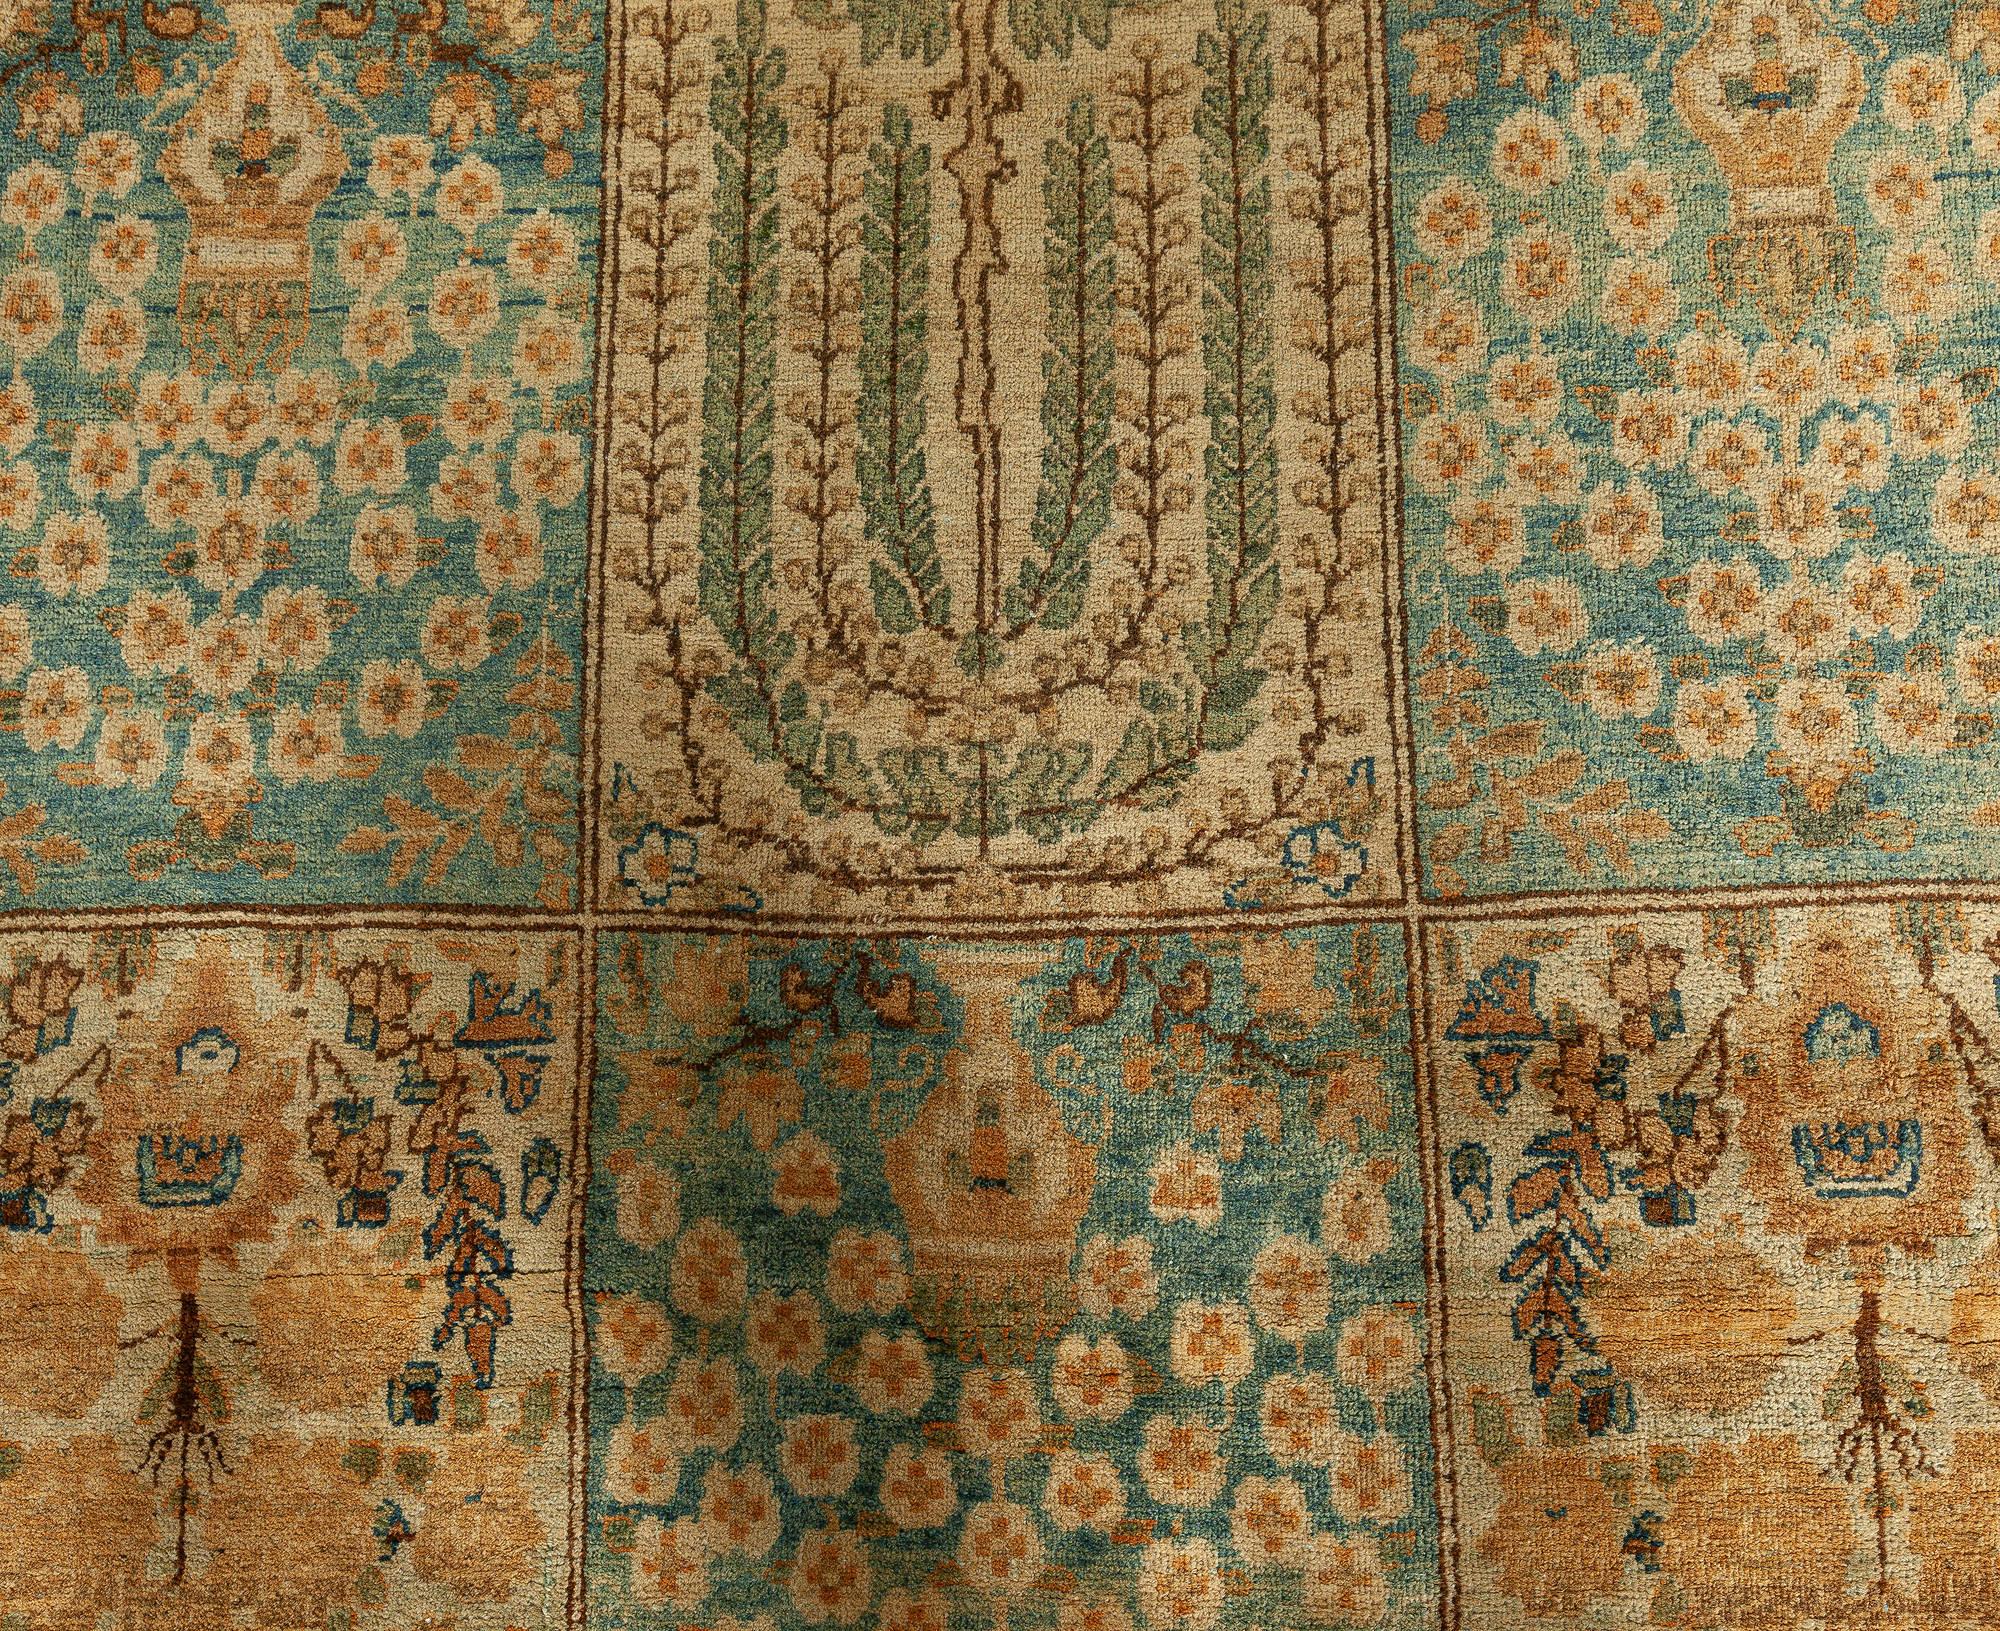 19th century Persian Tabriz botanic handwoven wool rug
Size: 11'1